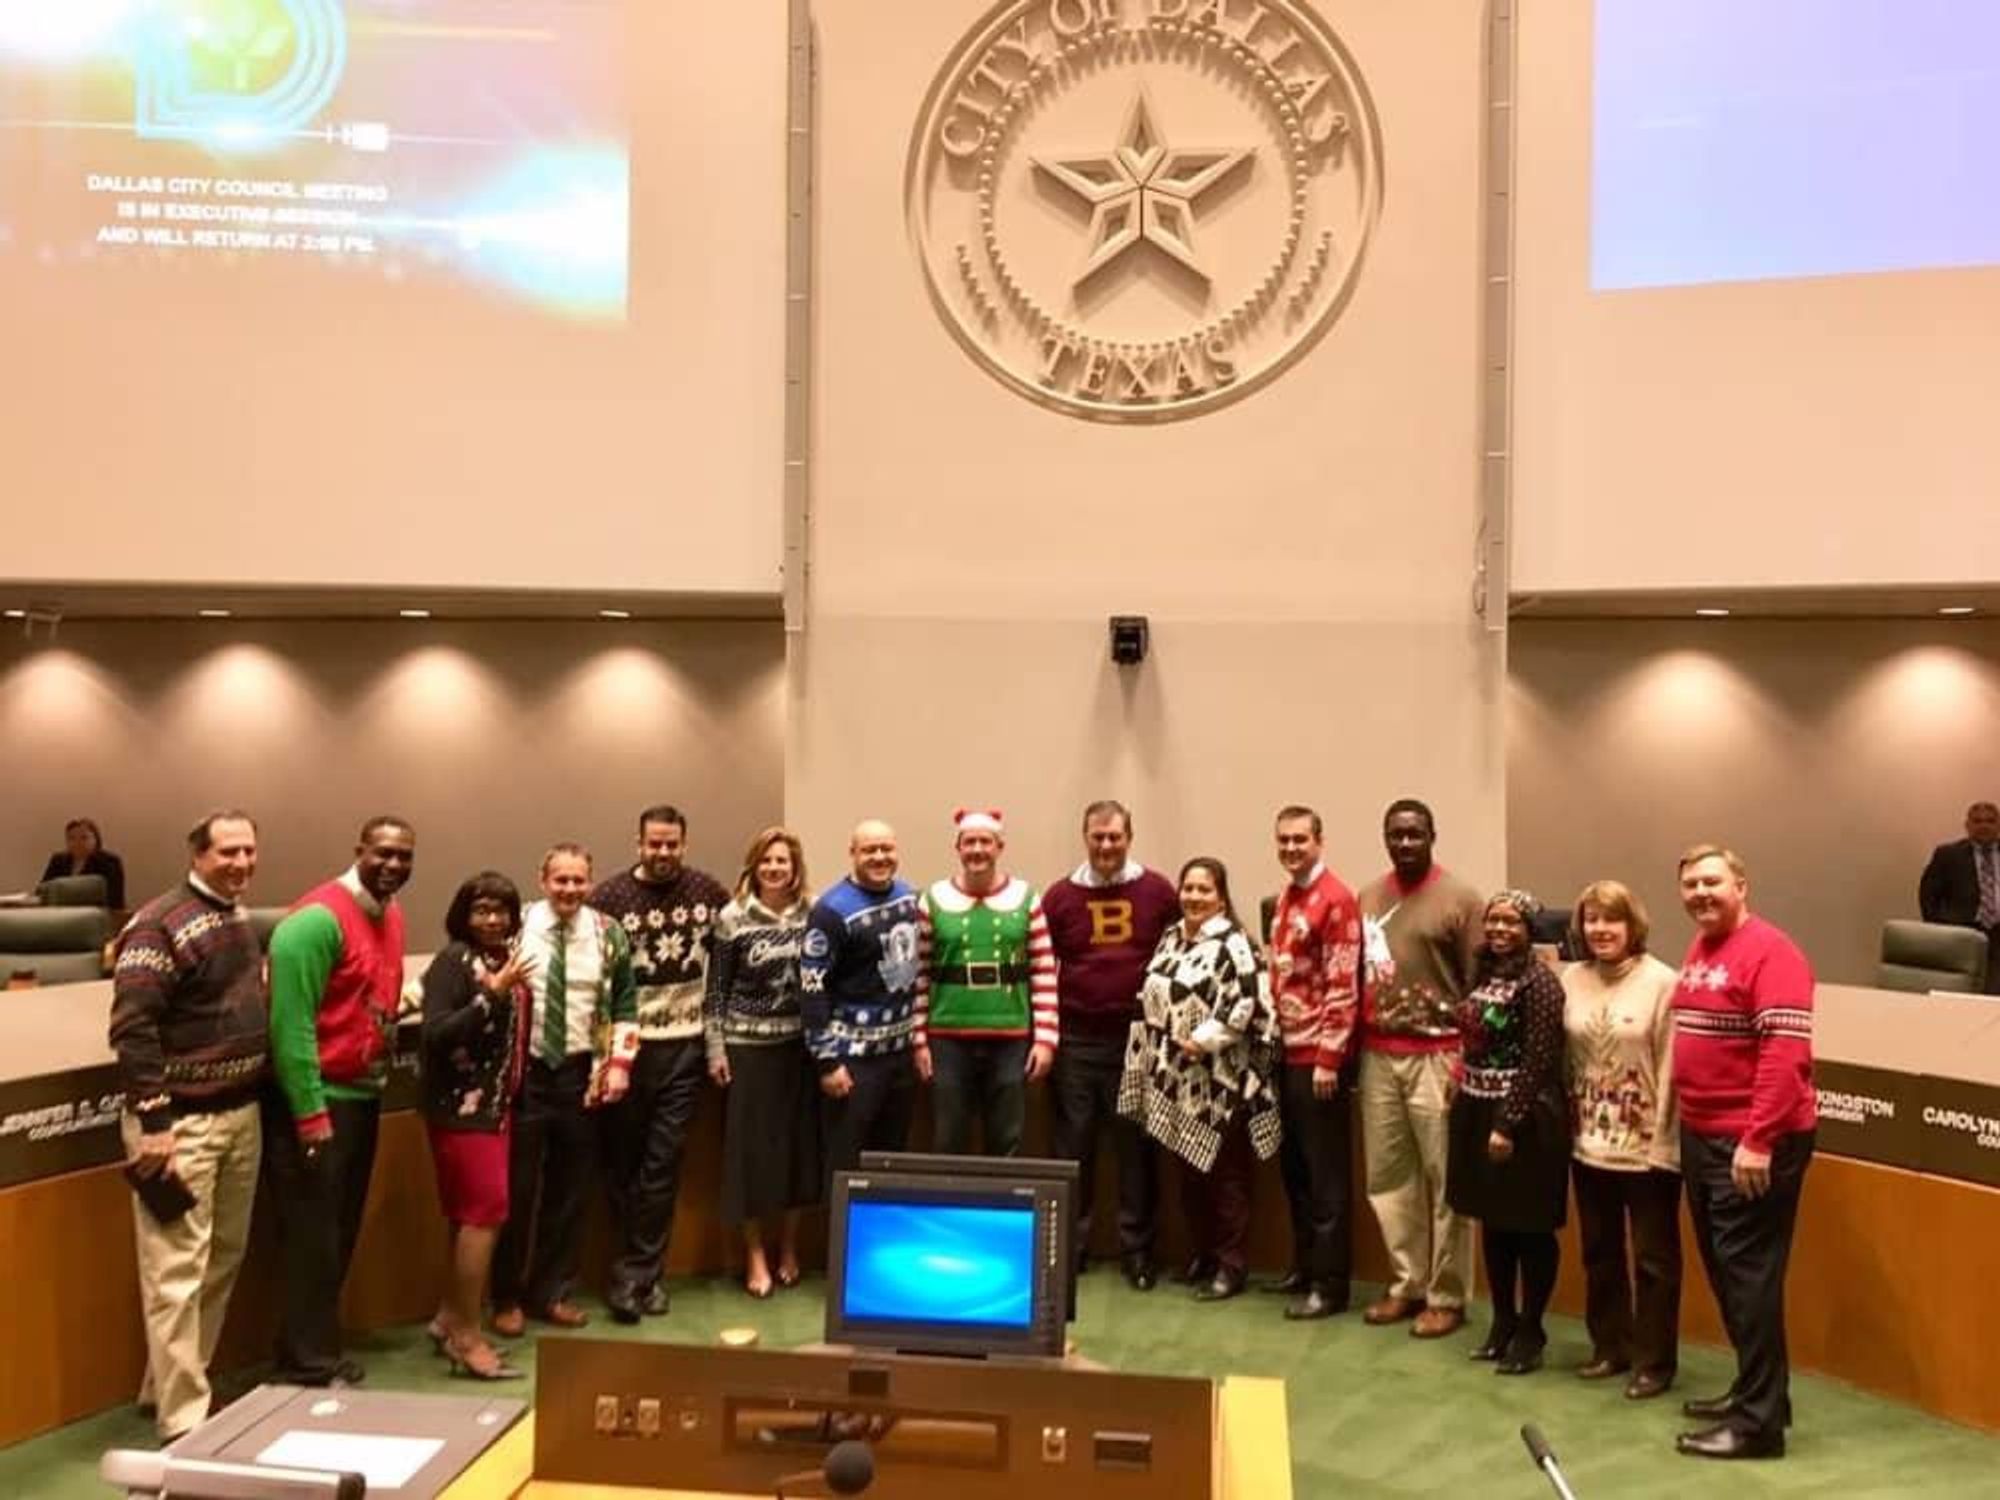 Dallas City Council, ugly Xmas sweater